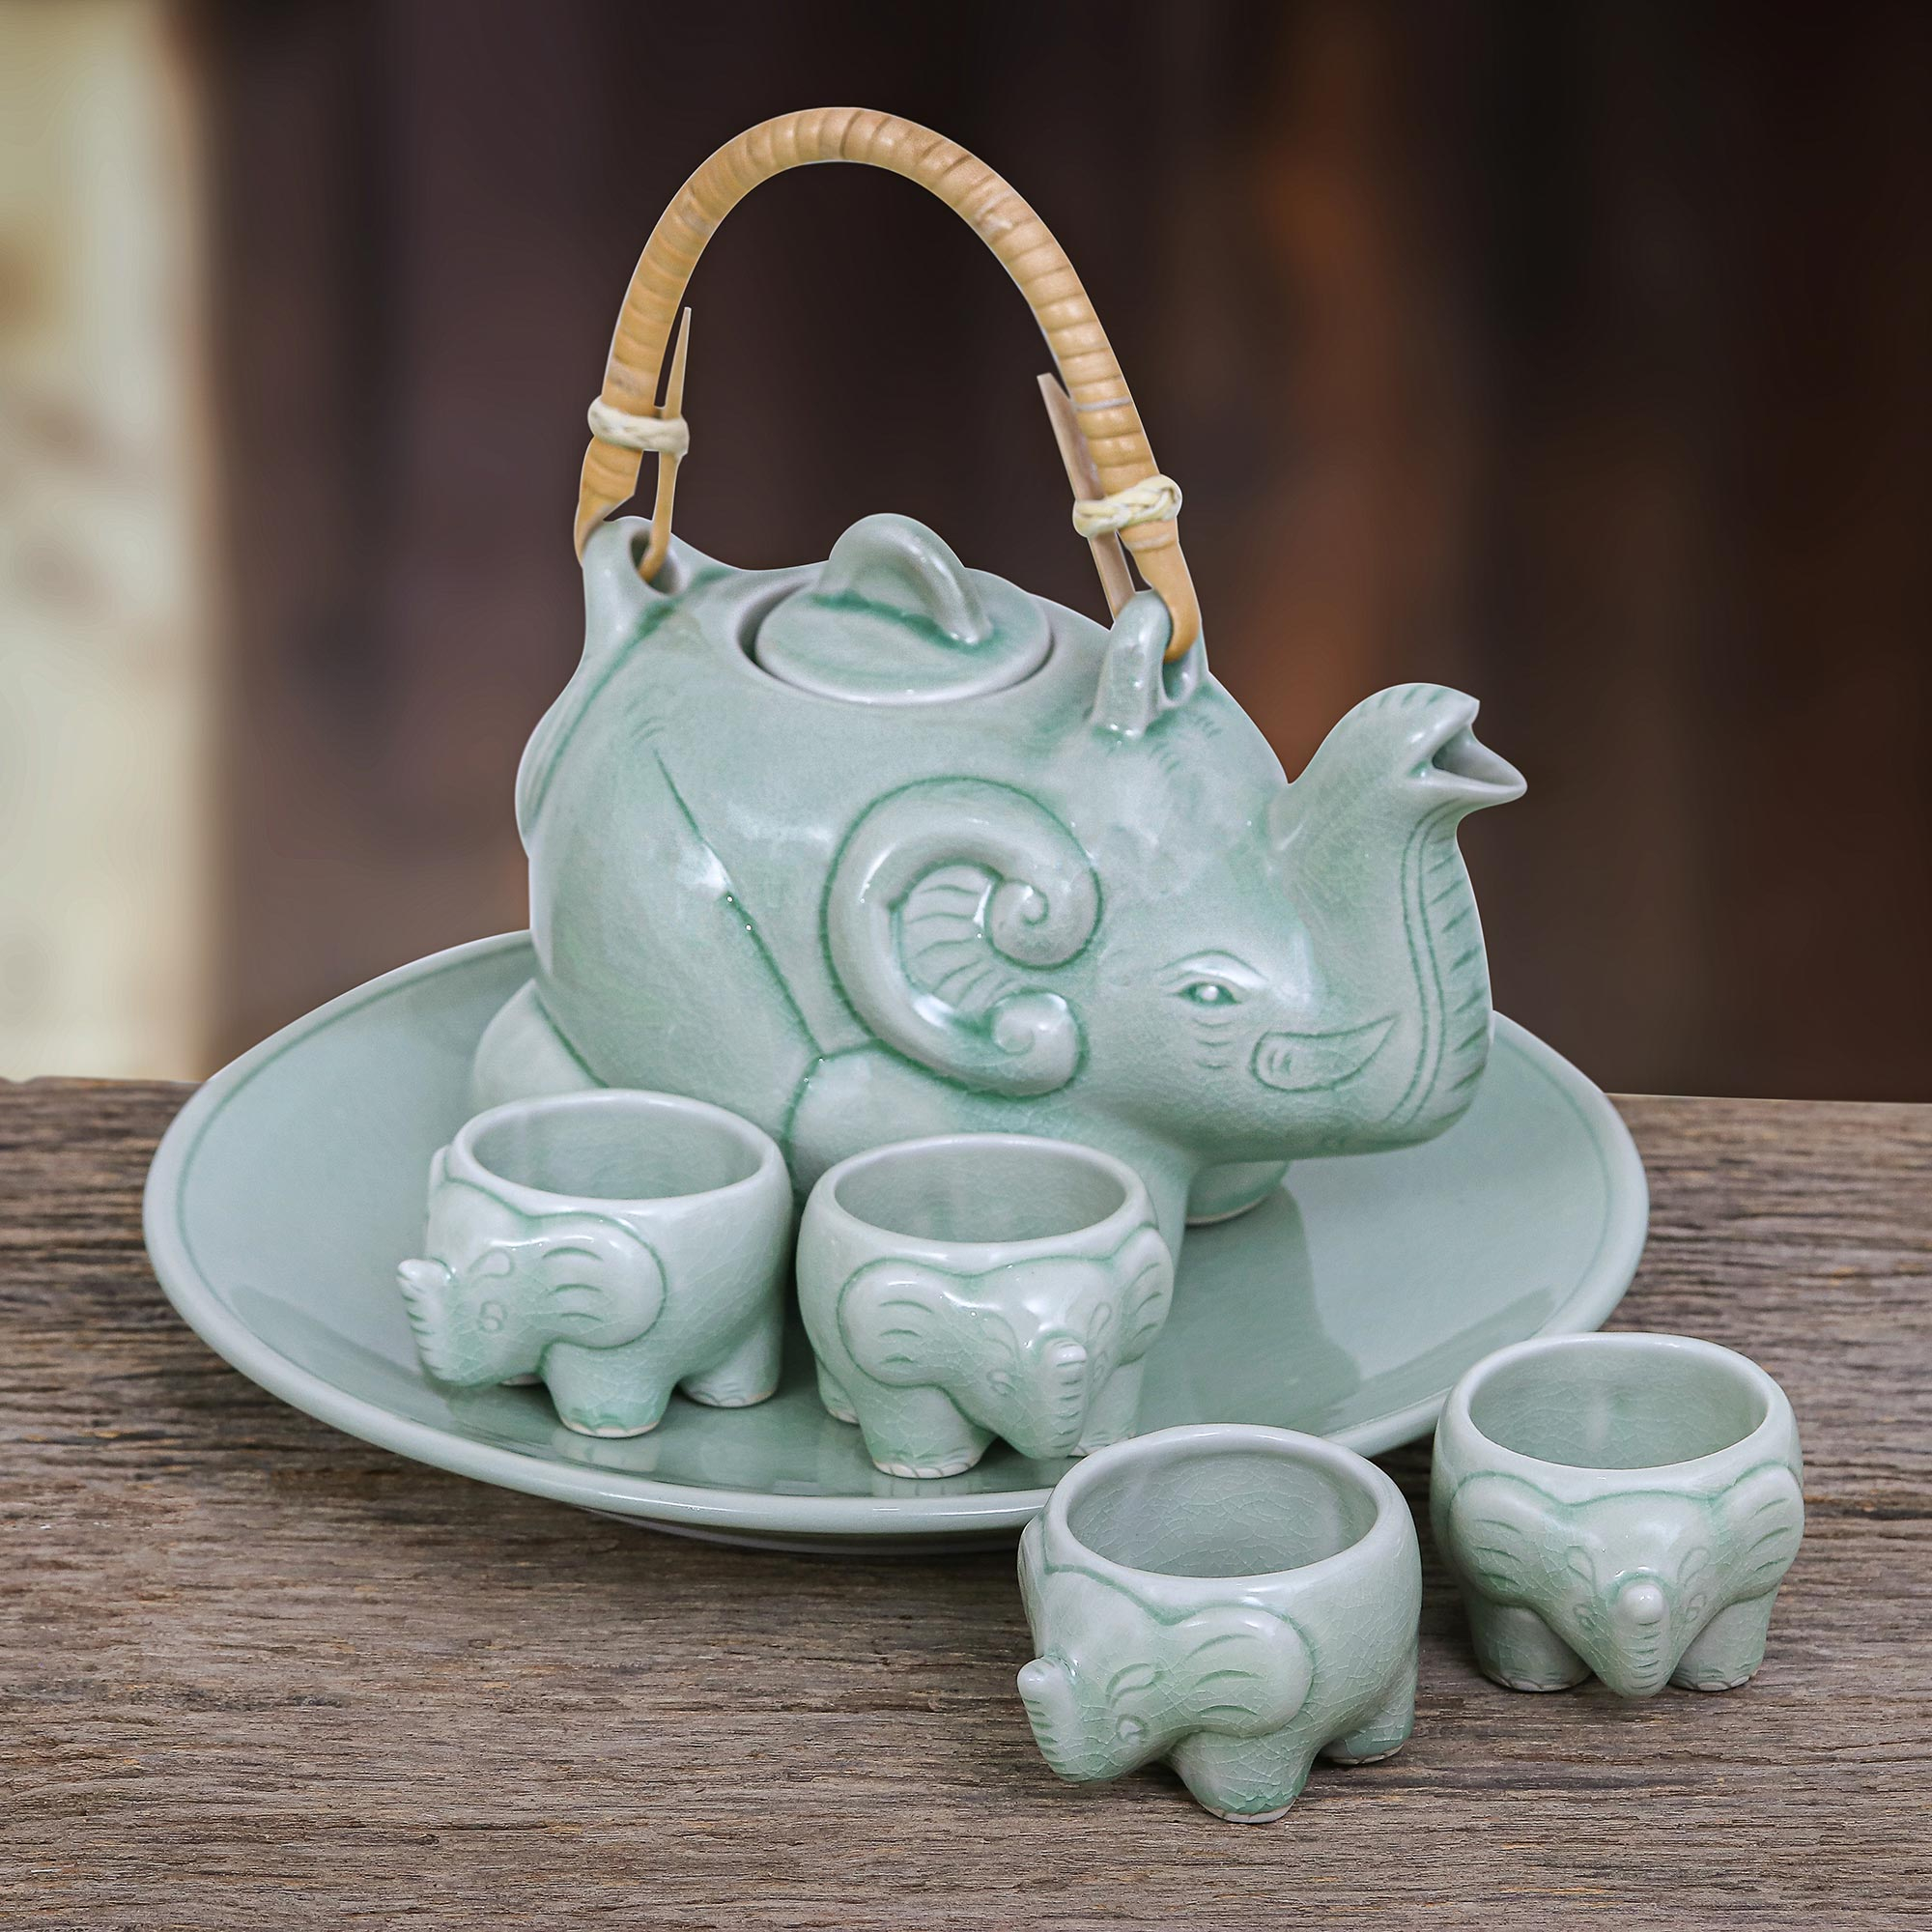 Pair of Handmade Decorative Blue Pottery Ceramic Elephant Figurine